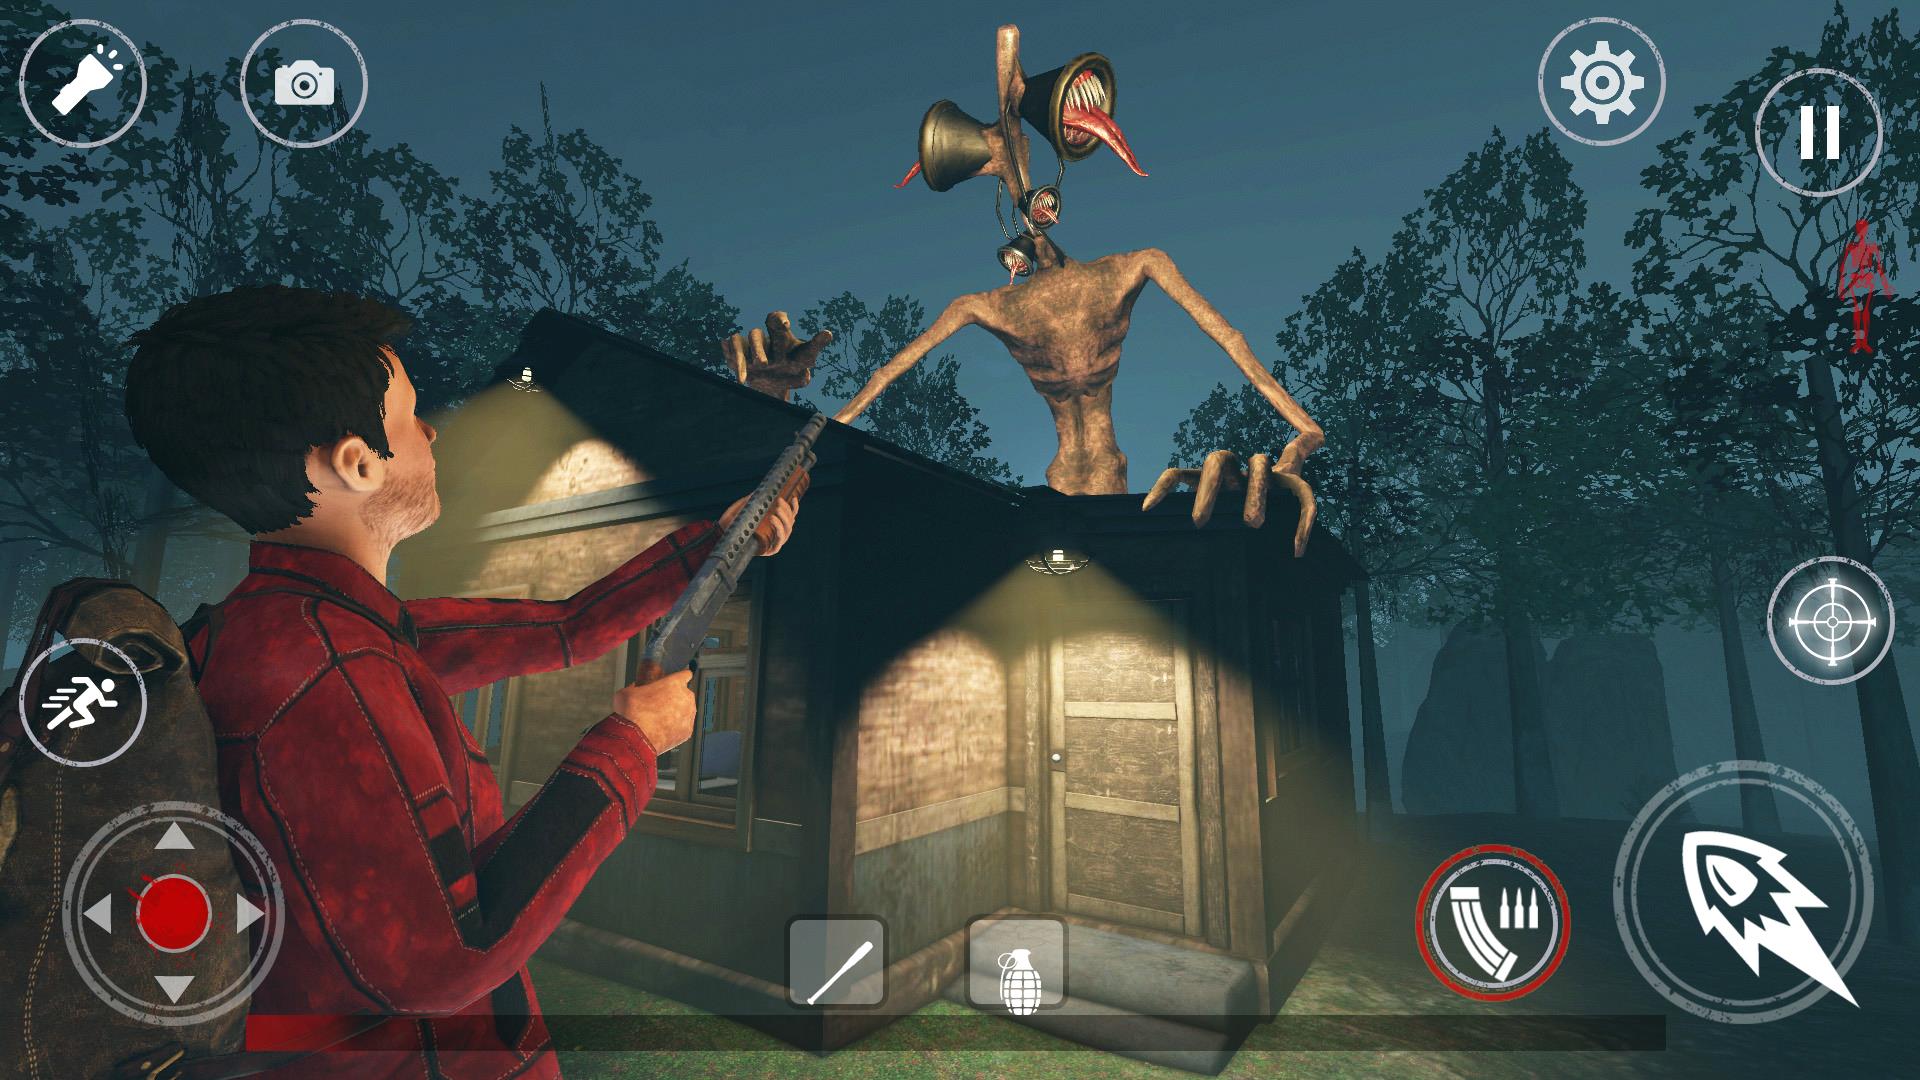 Siren Scary Head - Horror Game Screenshot 2